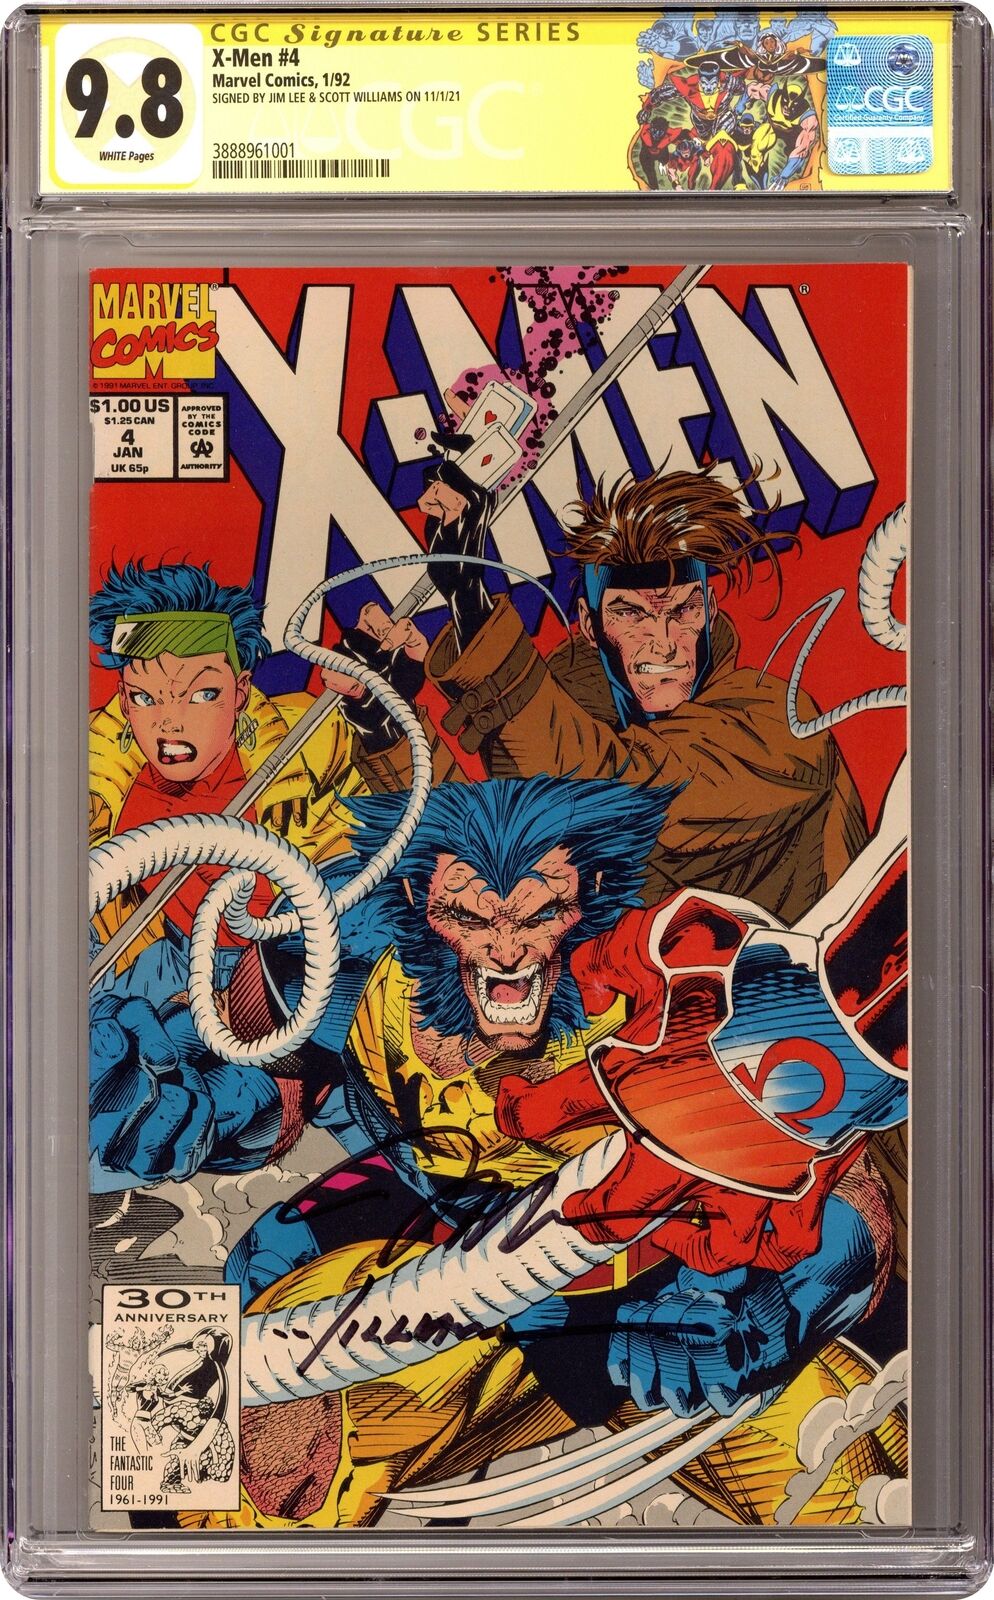 X-Men #4D CGC 9.8 SS Jim Lee/Williams 1992 3888961001 1st app. Omega Red